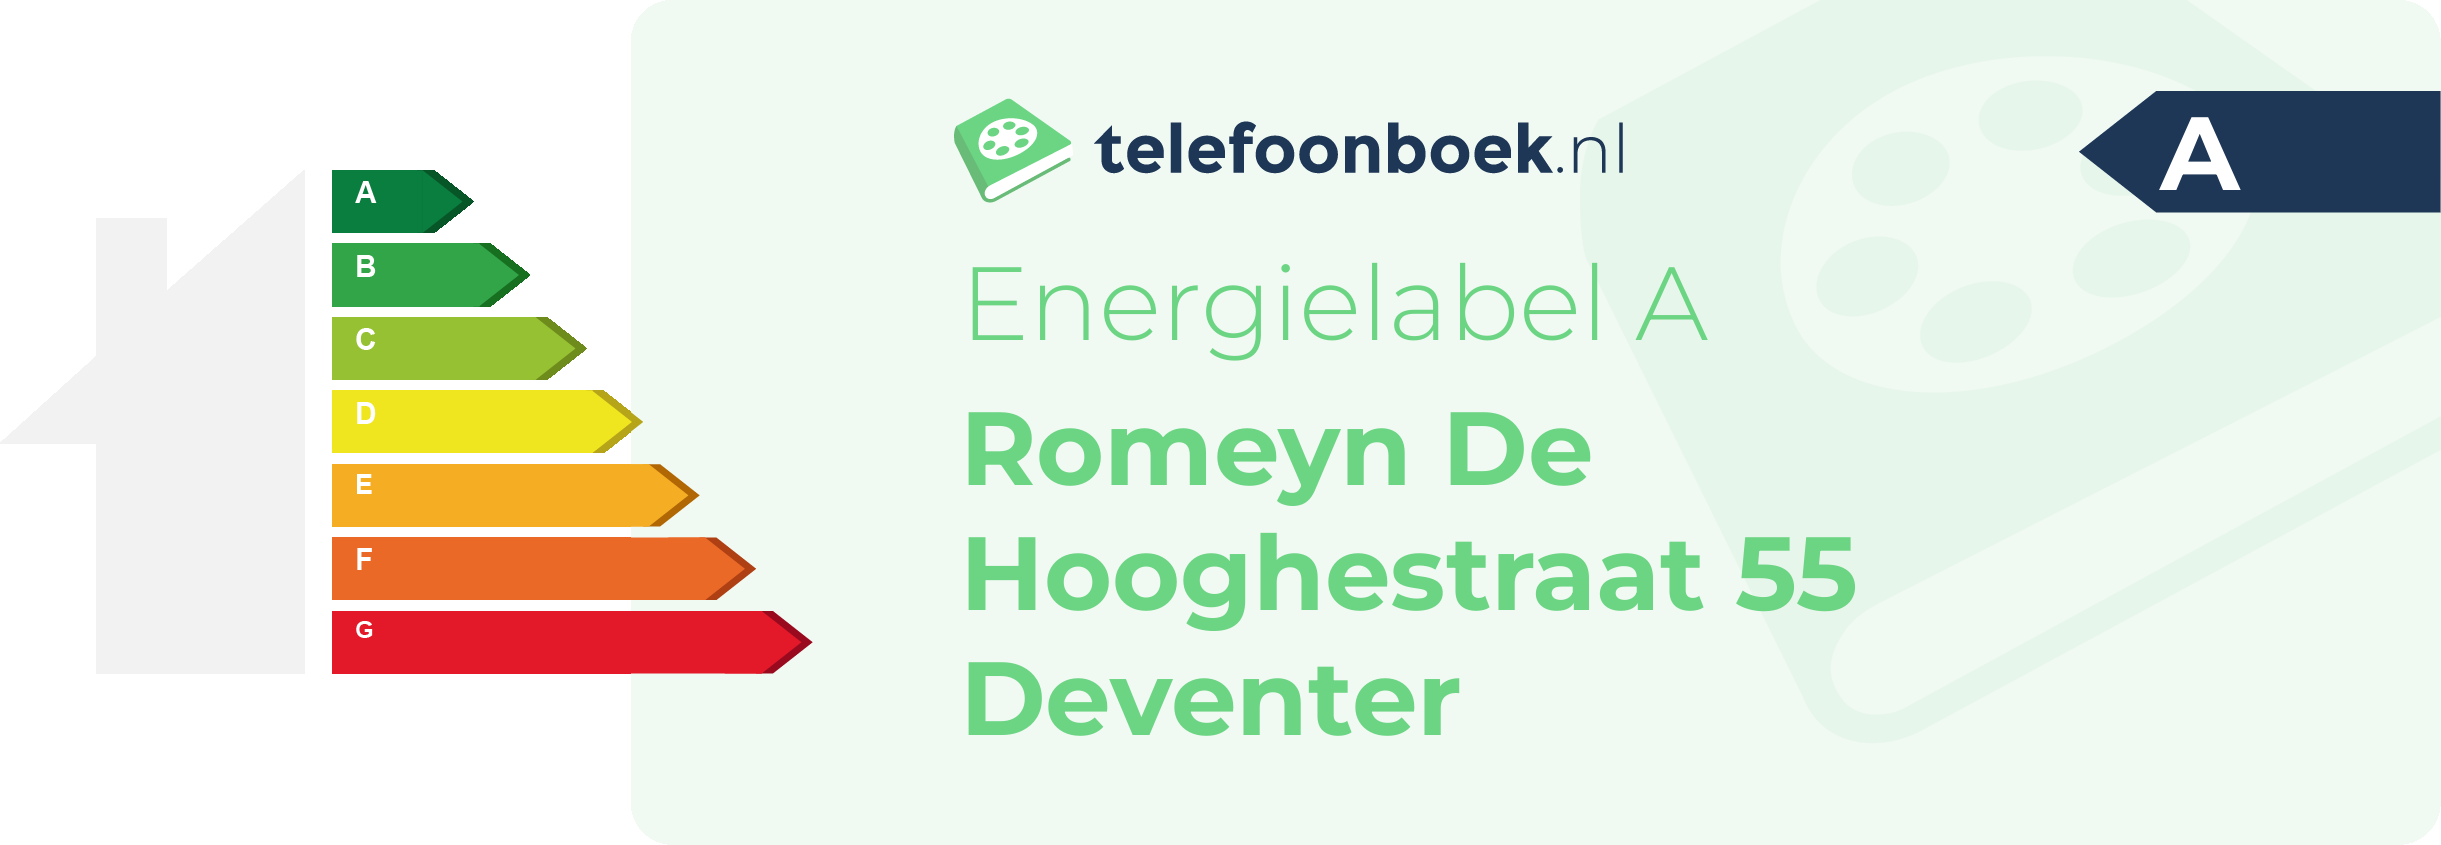 Energielabel Romeyn De Hooghestraat 55 Deventer